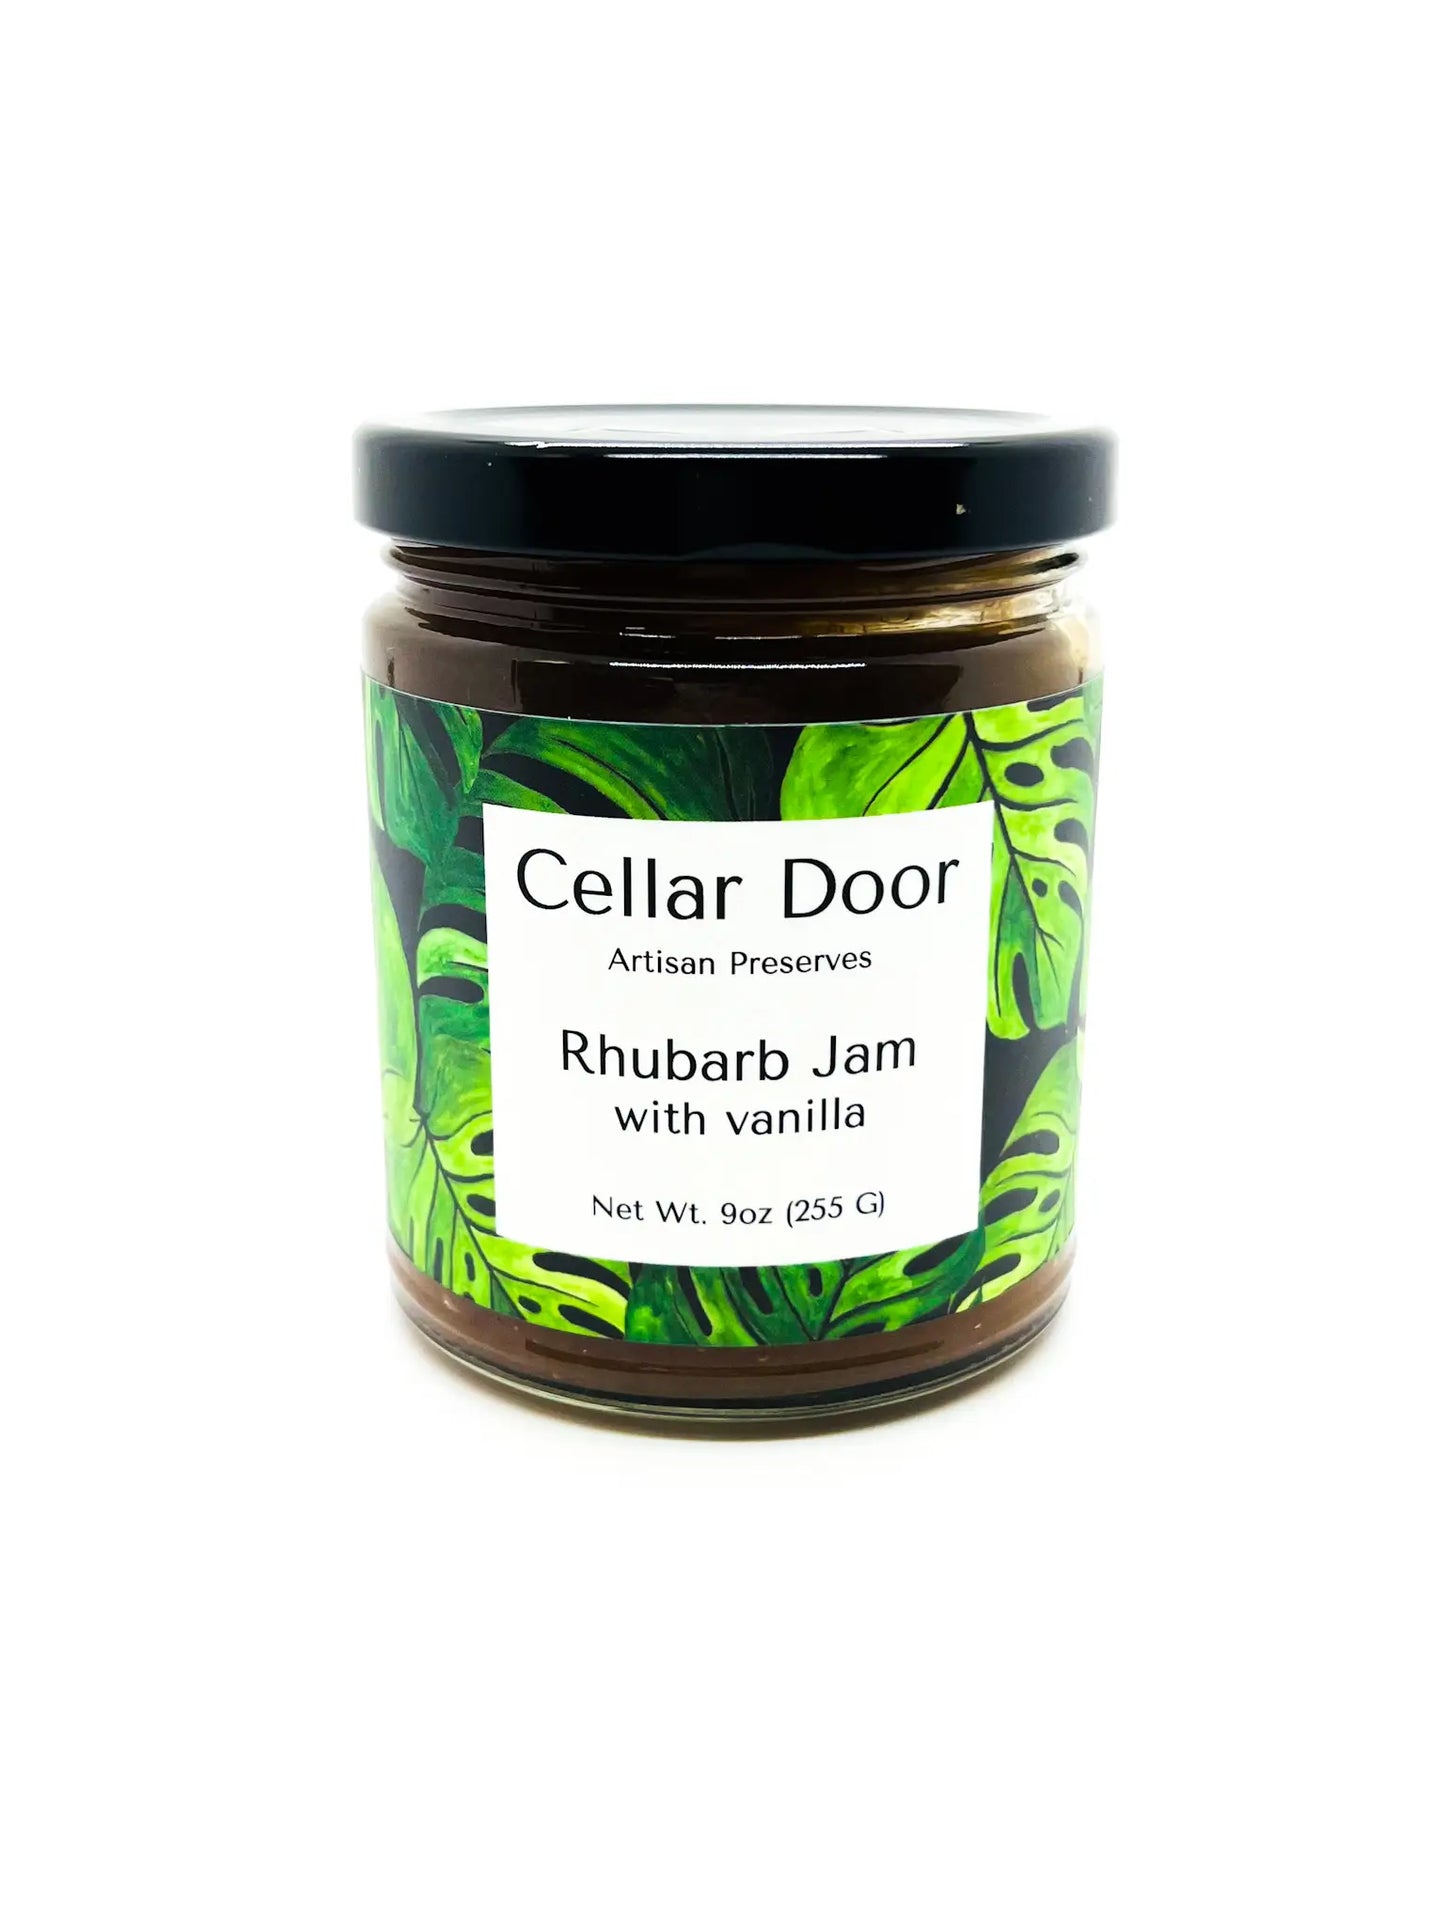 Cellar Door Rhubarb Jam with Vanilla, 255g/9oz